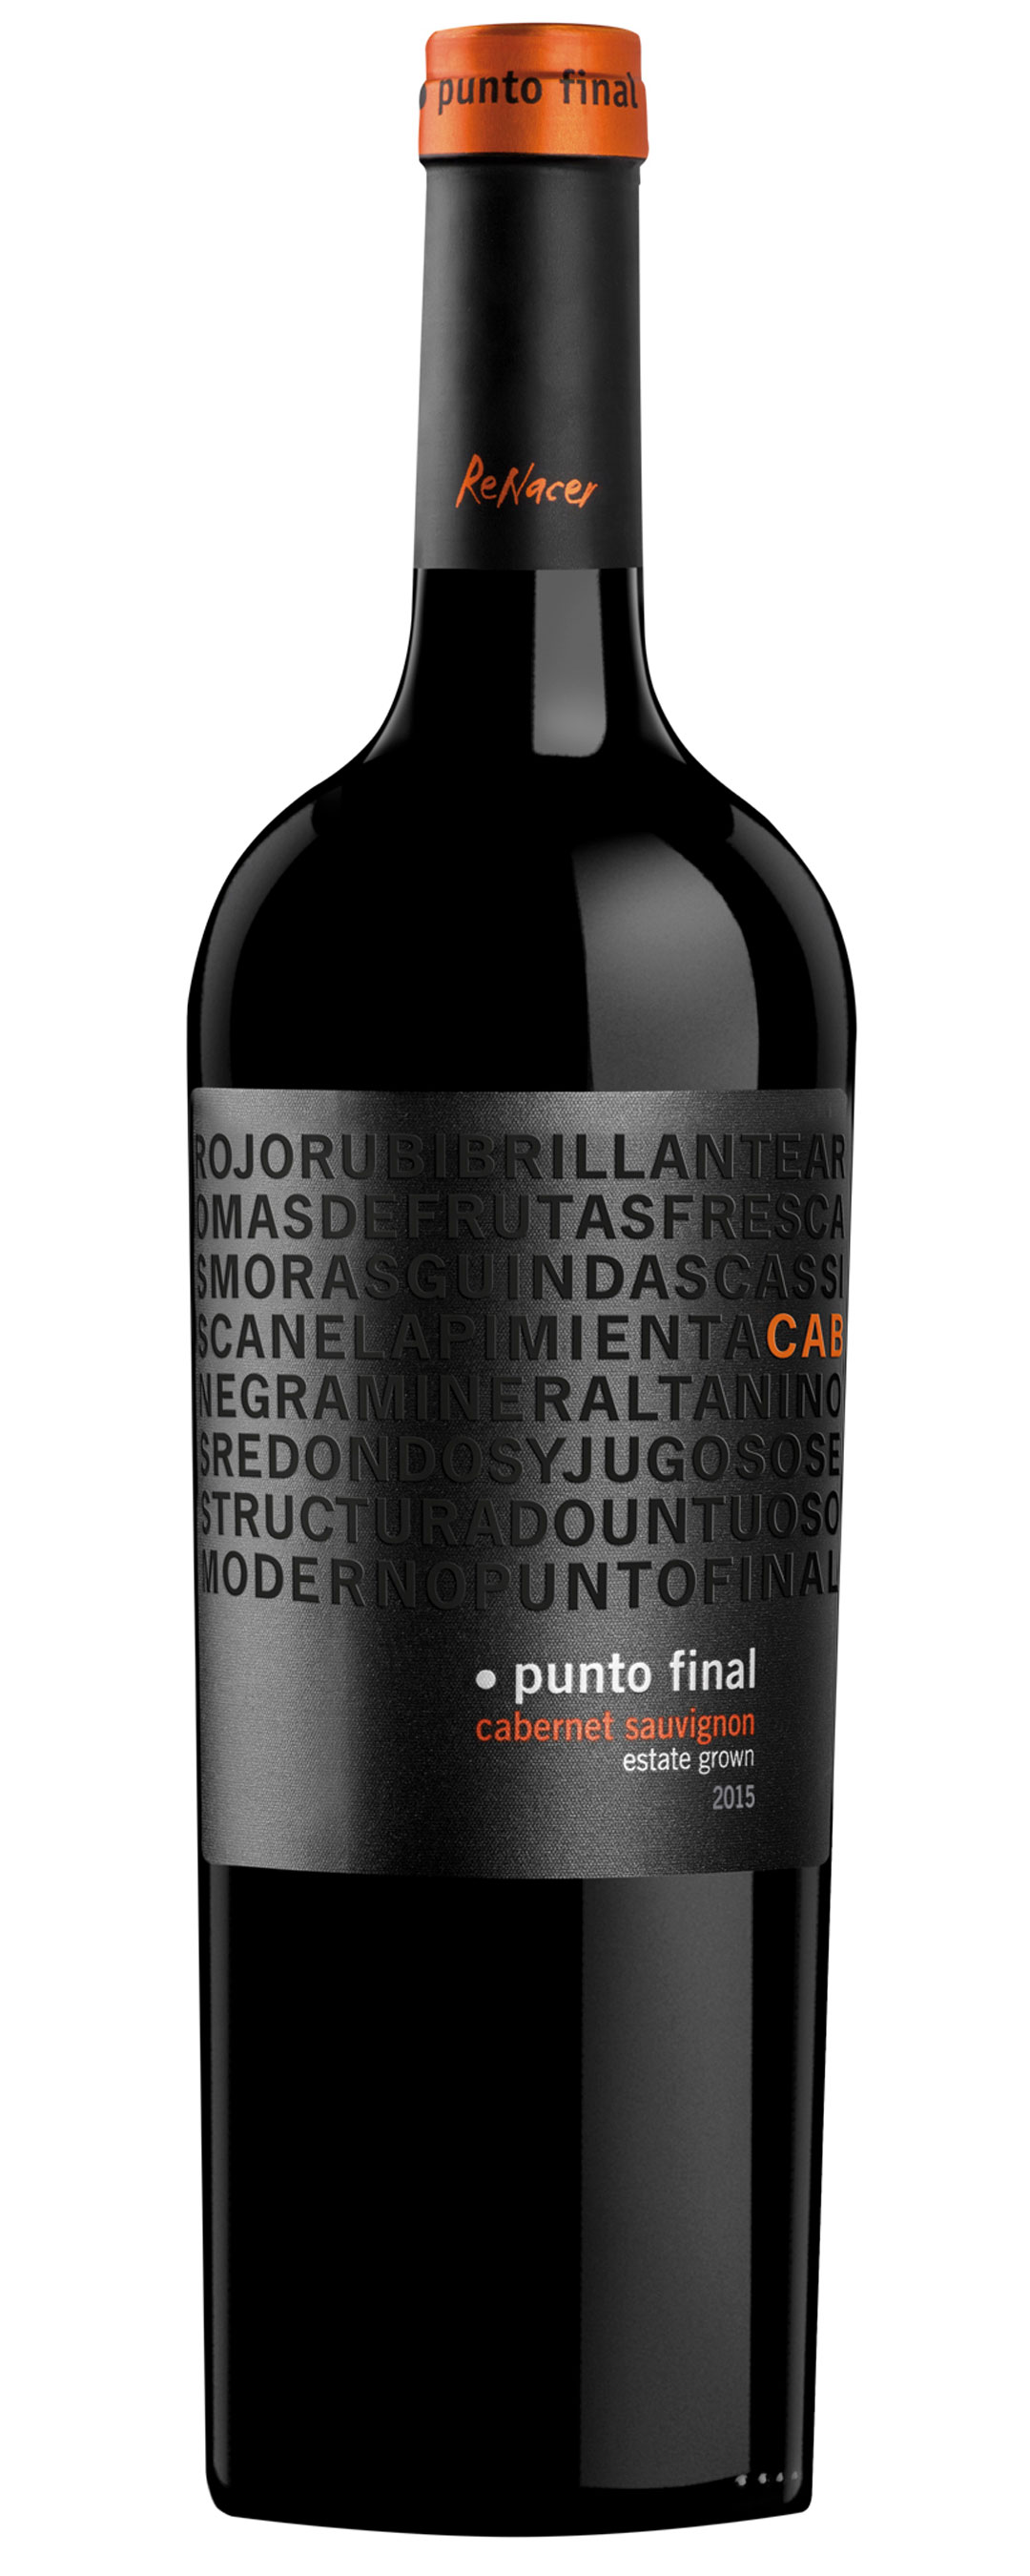 2015 Renacer Punto Final Cabernet Sauvignon Argentina - click image for full description